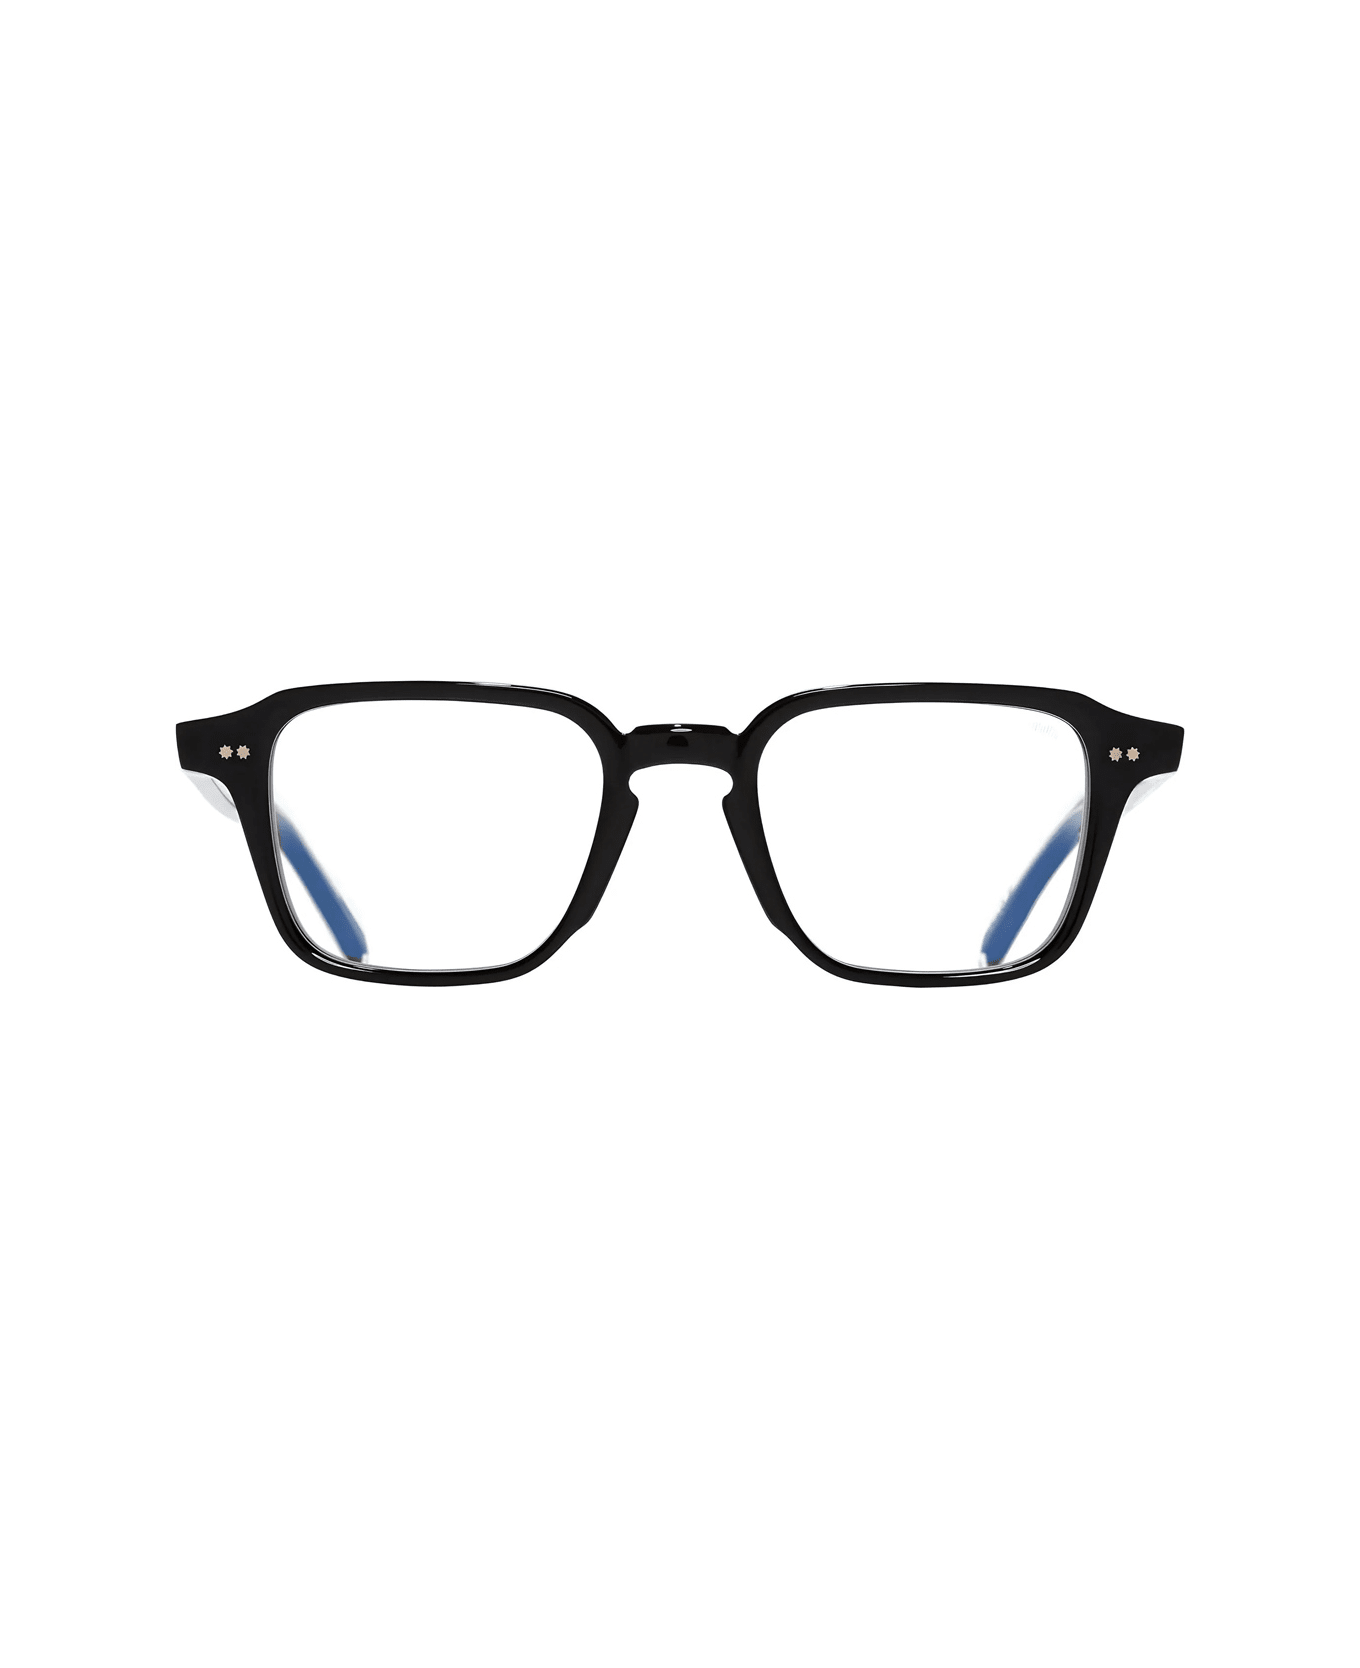 Cutler and Gross Gr07 01 Black Glasses - Nero